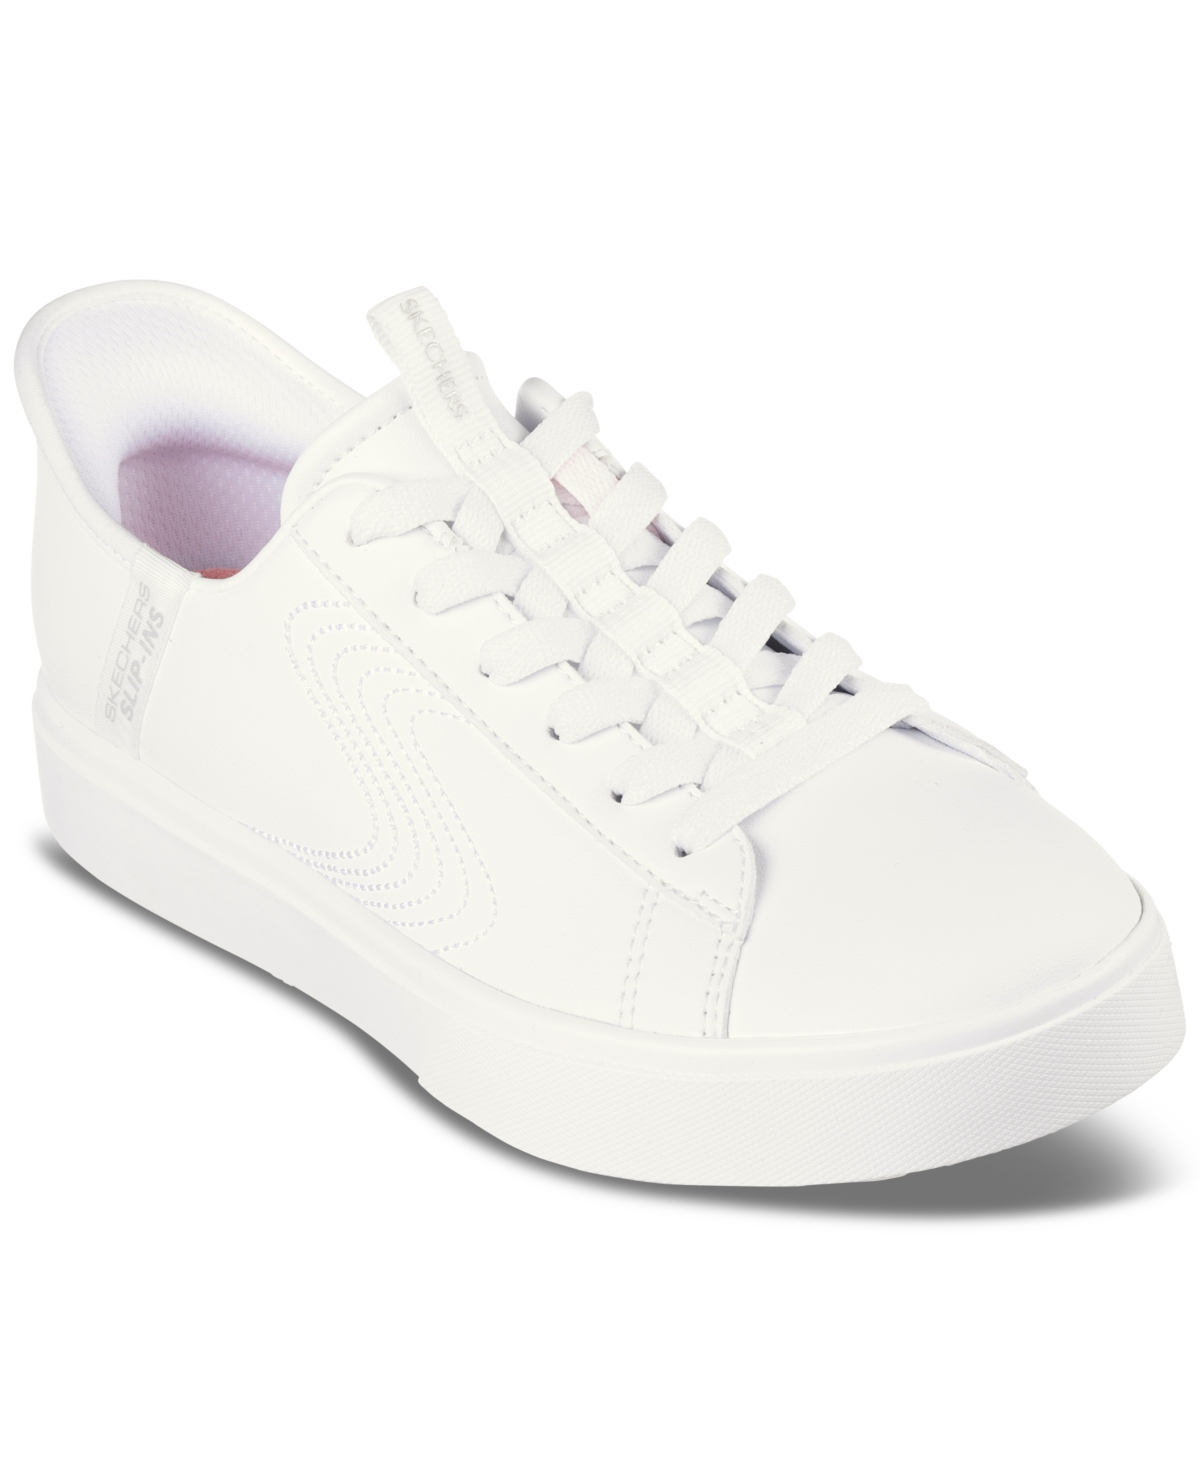 Women's Slip-Ins - Eden Lx Slip-On Casual Sneakers from Finish Line - White